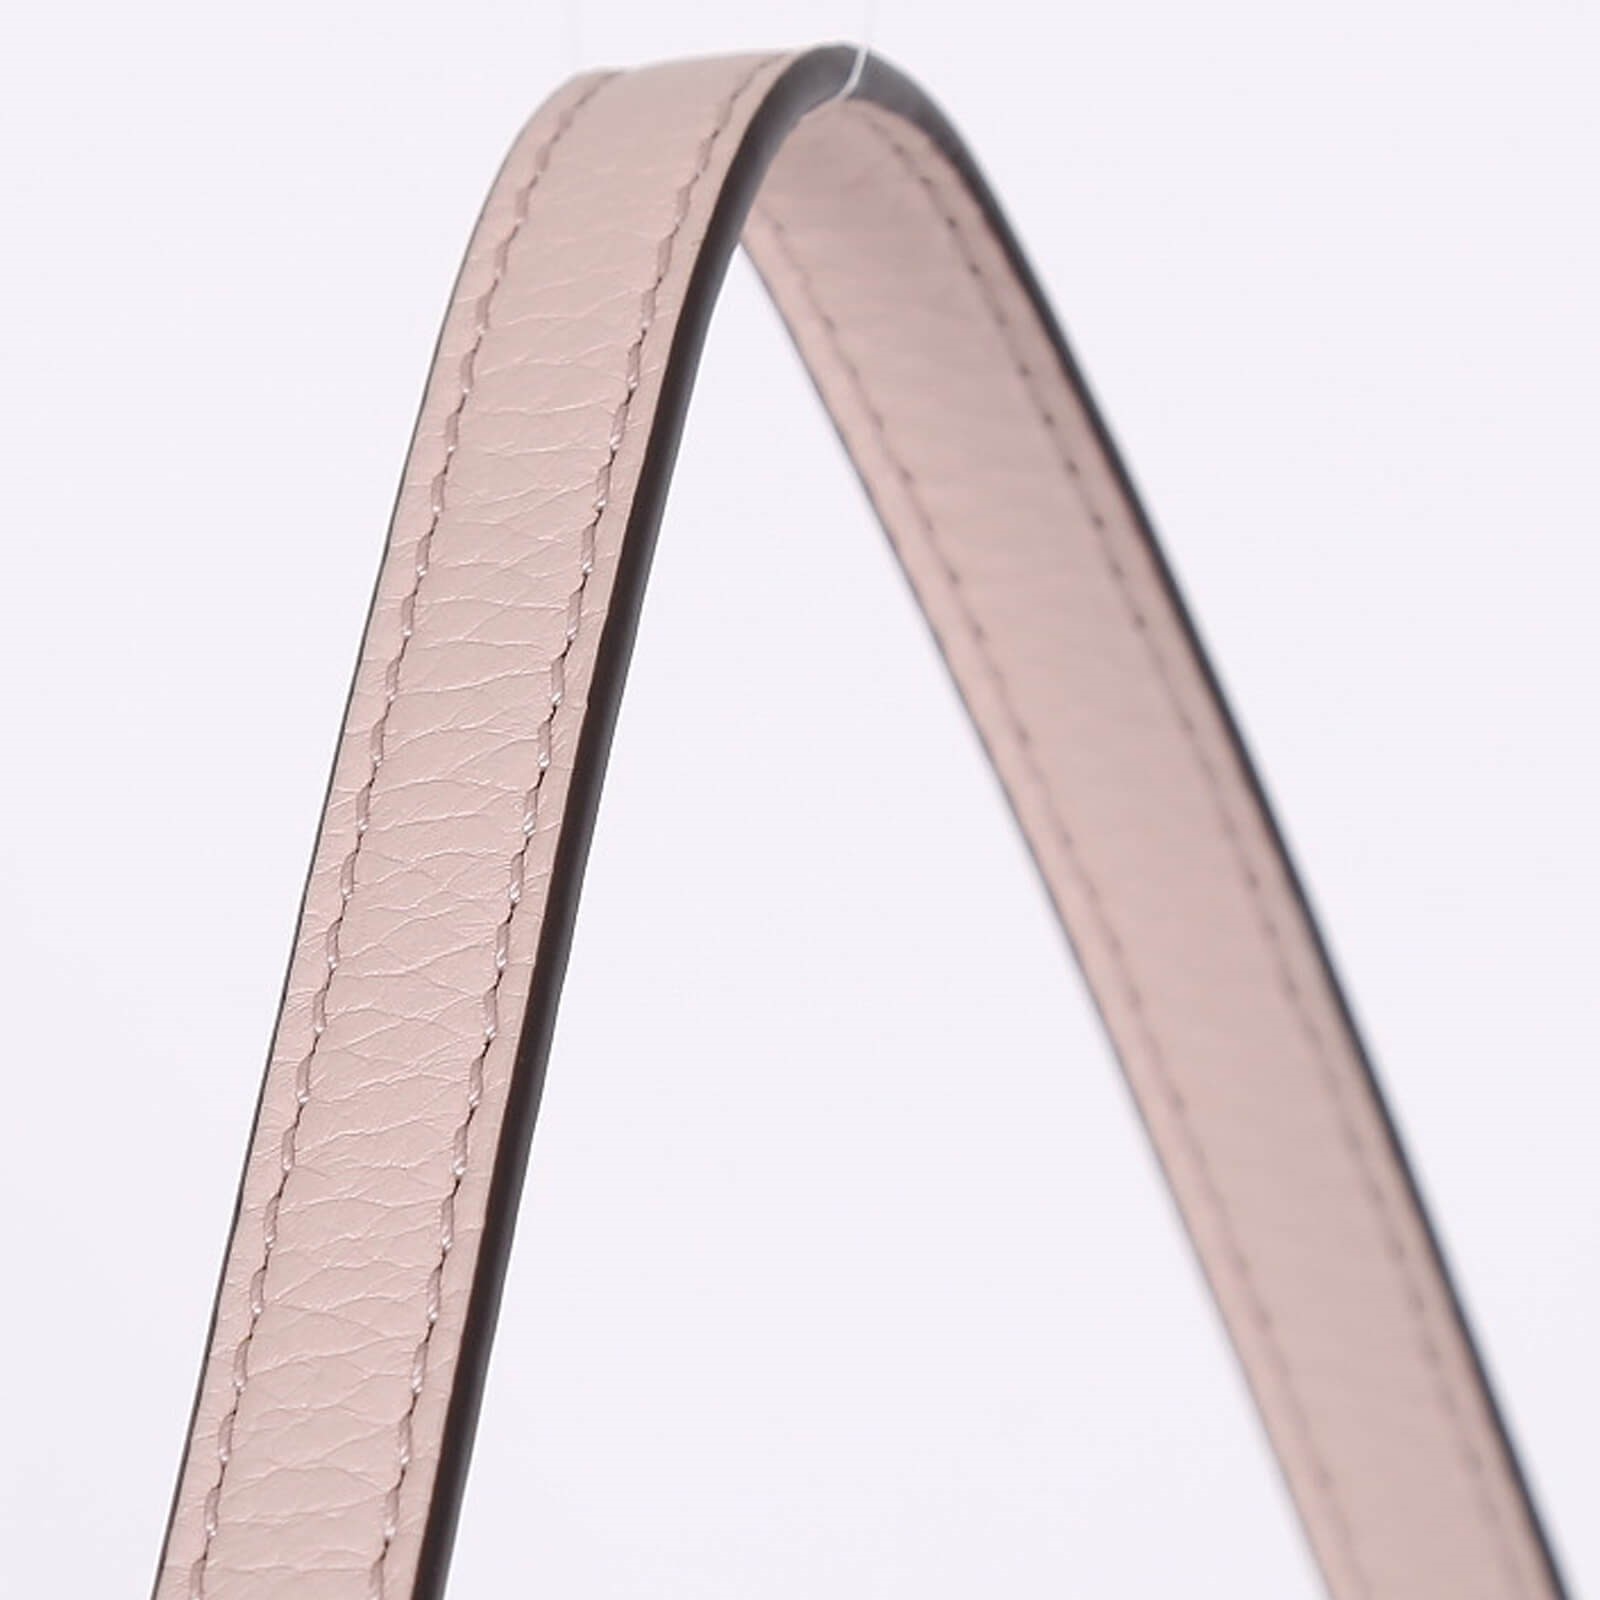 Michael Kors - Lupita Medium Shoulder Bag Soft Pink